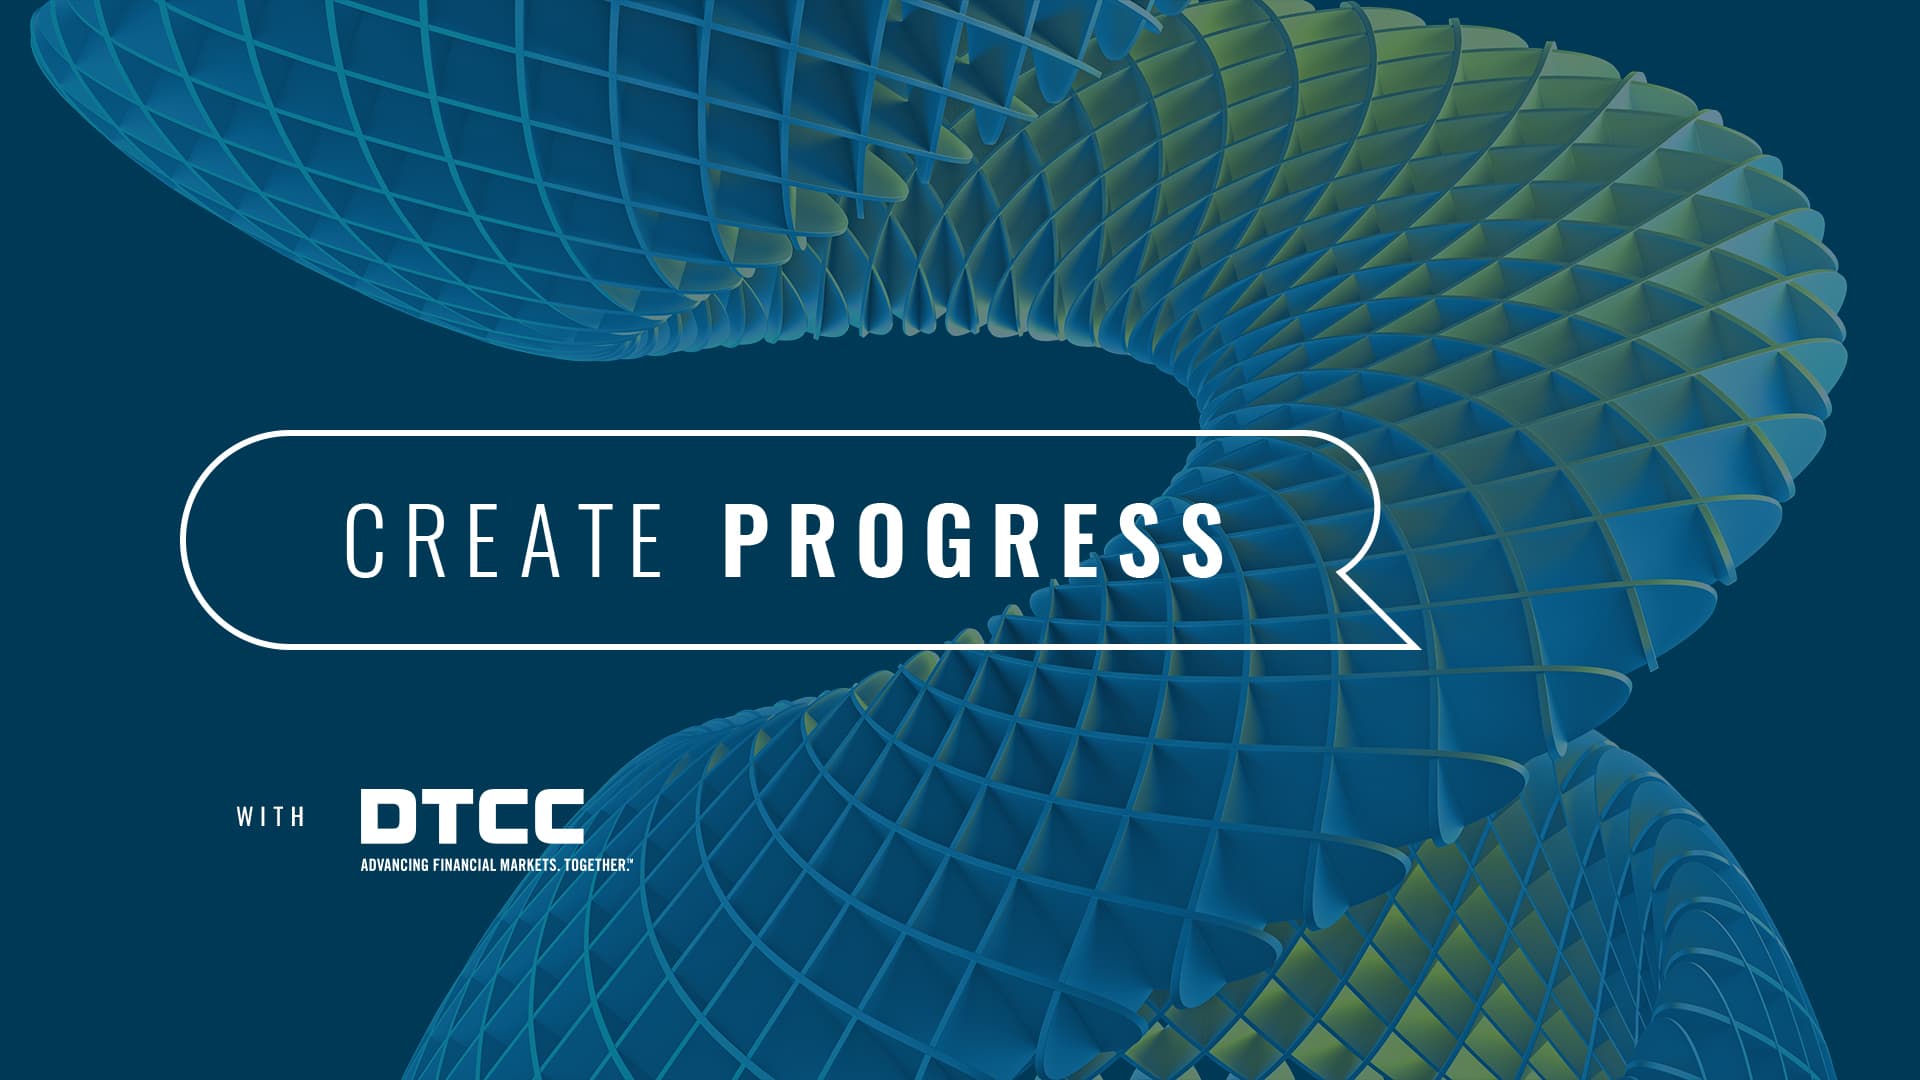 Create Progress with DTCC